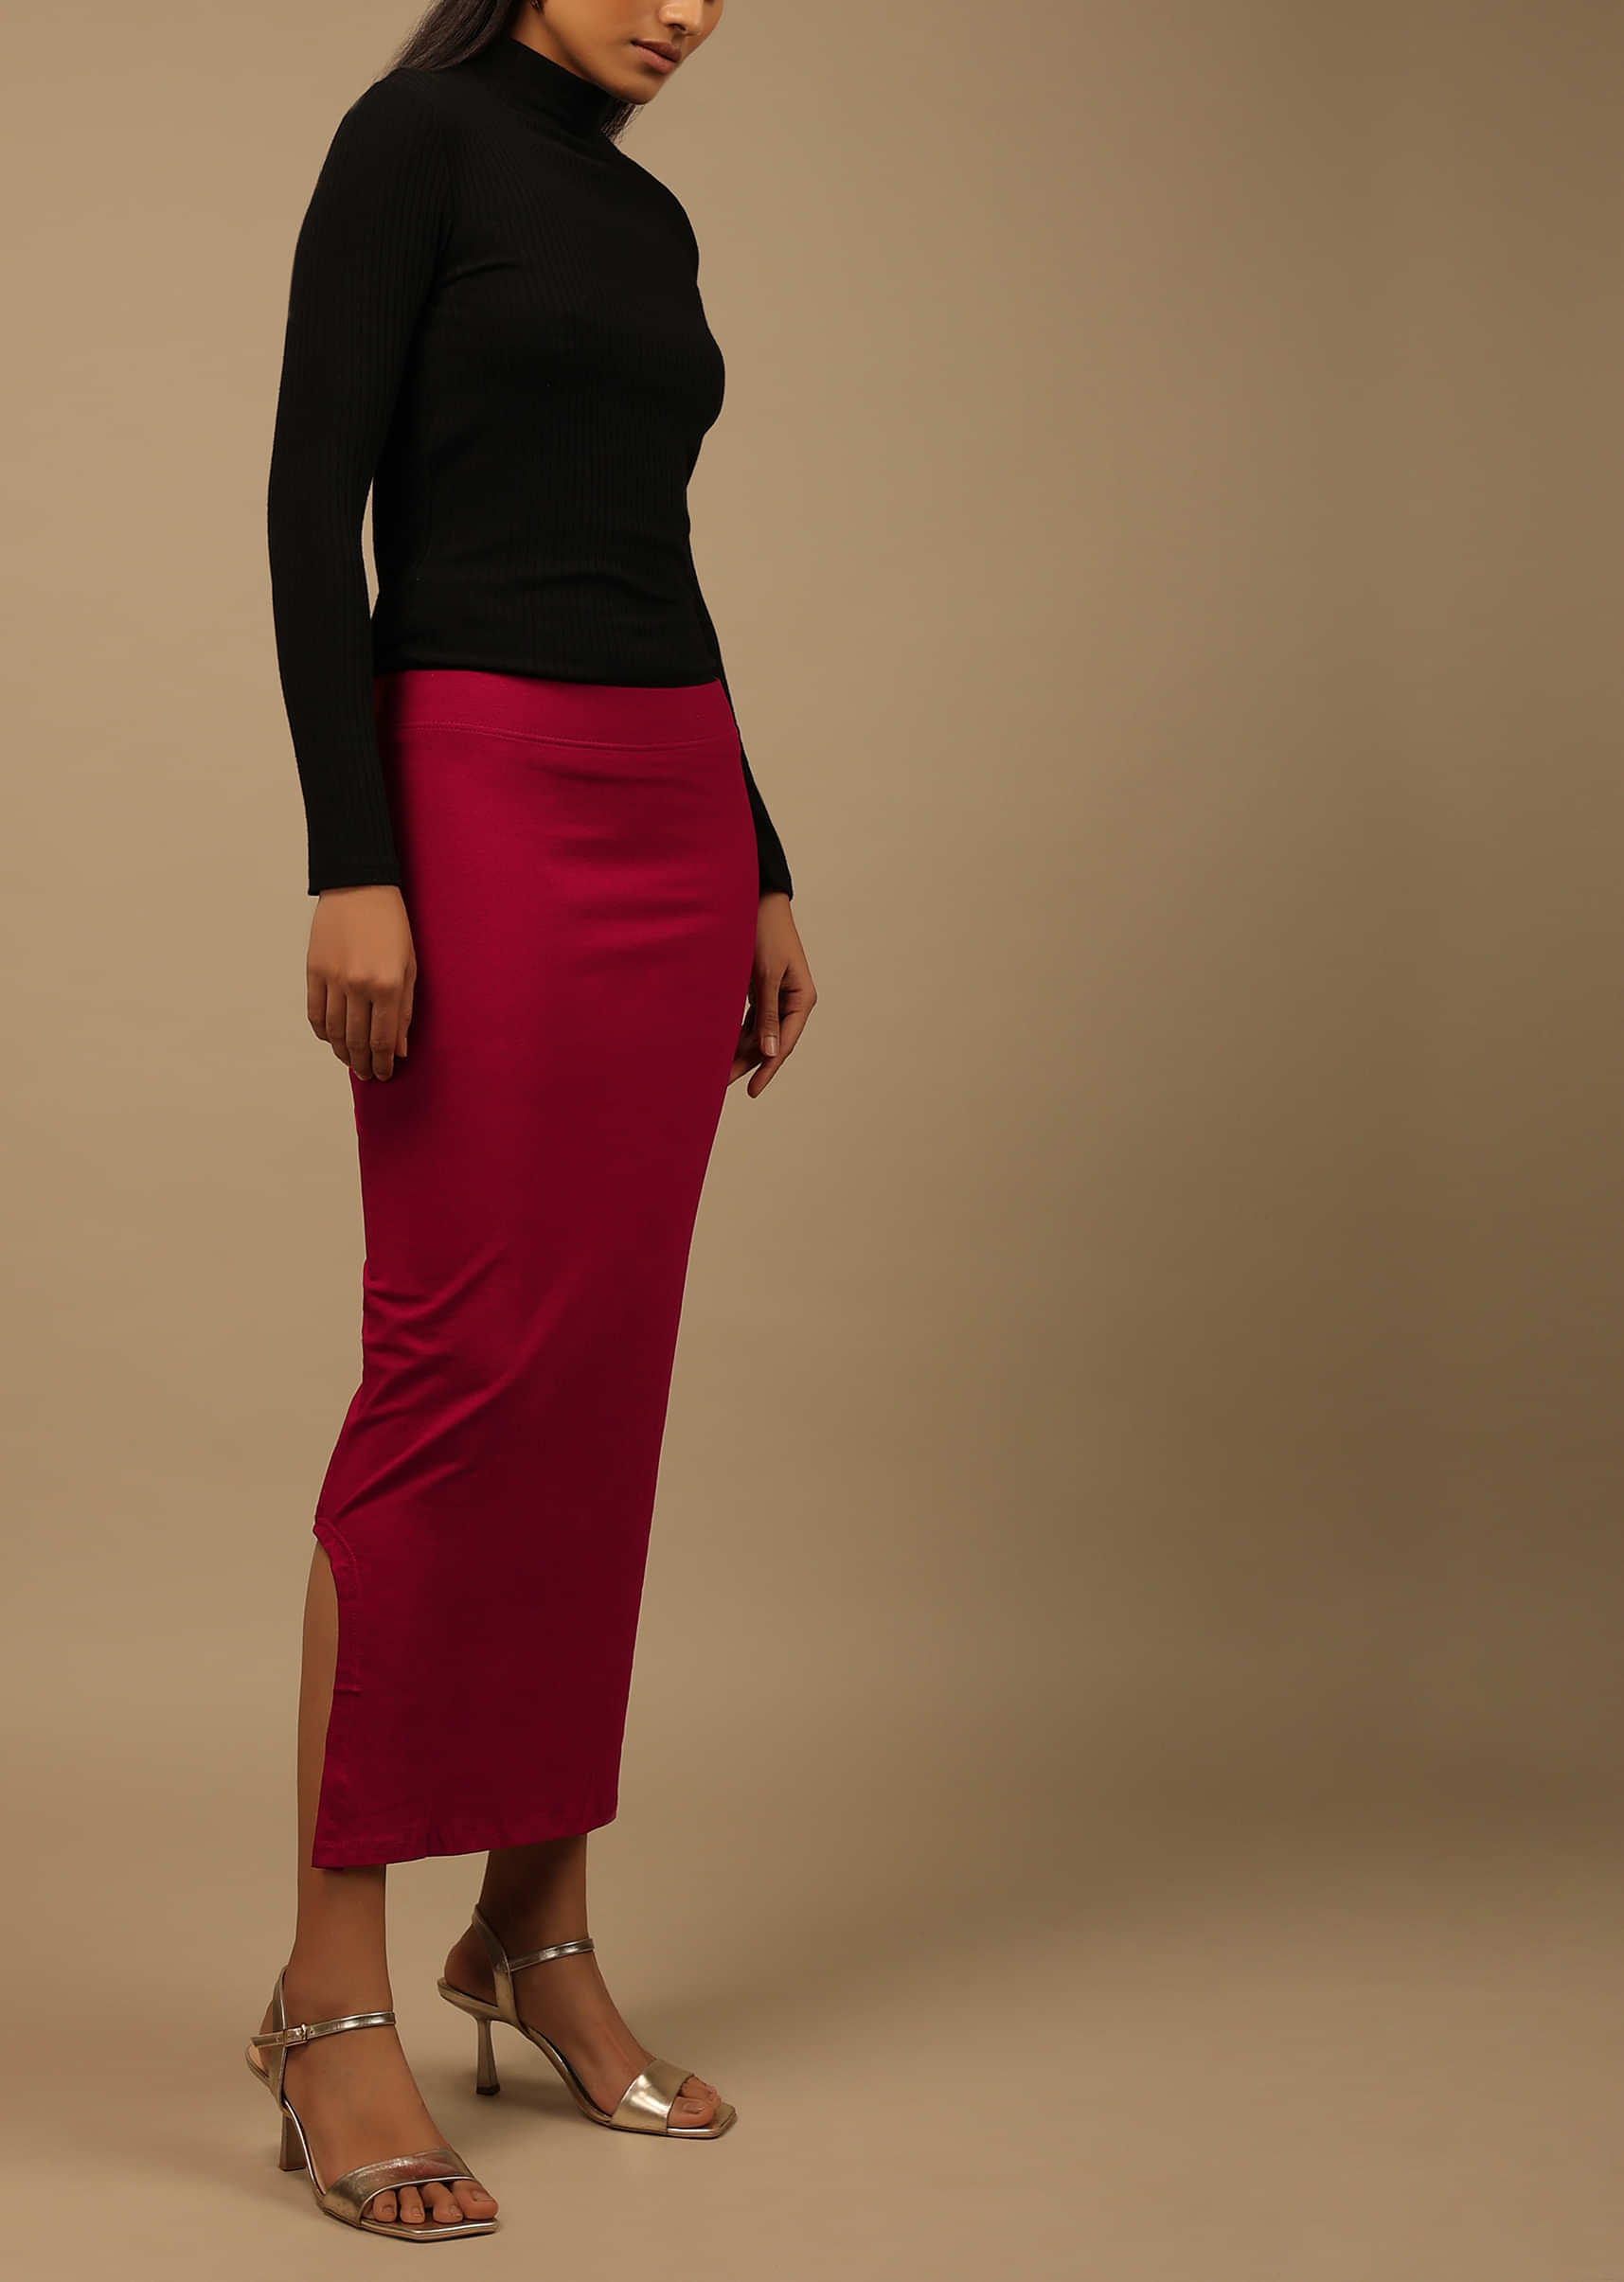 Buy PKYC Women's Dark Sea Green Lycra Shapewear Stretchable Slim Fit Saree  Petticoat (Free Size) at